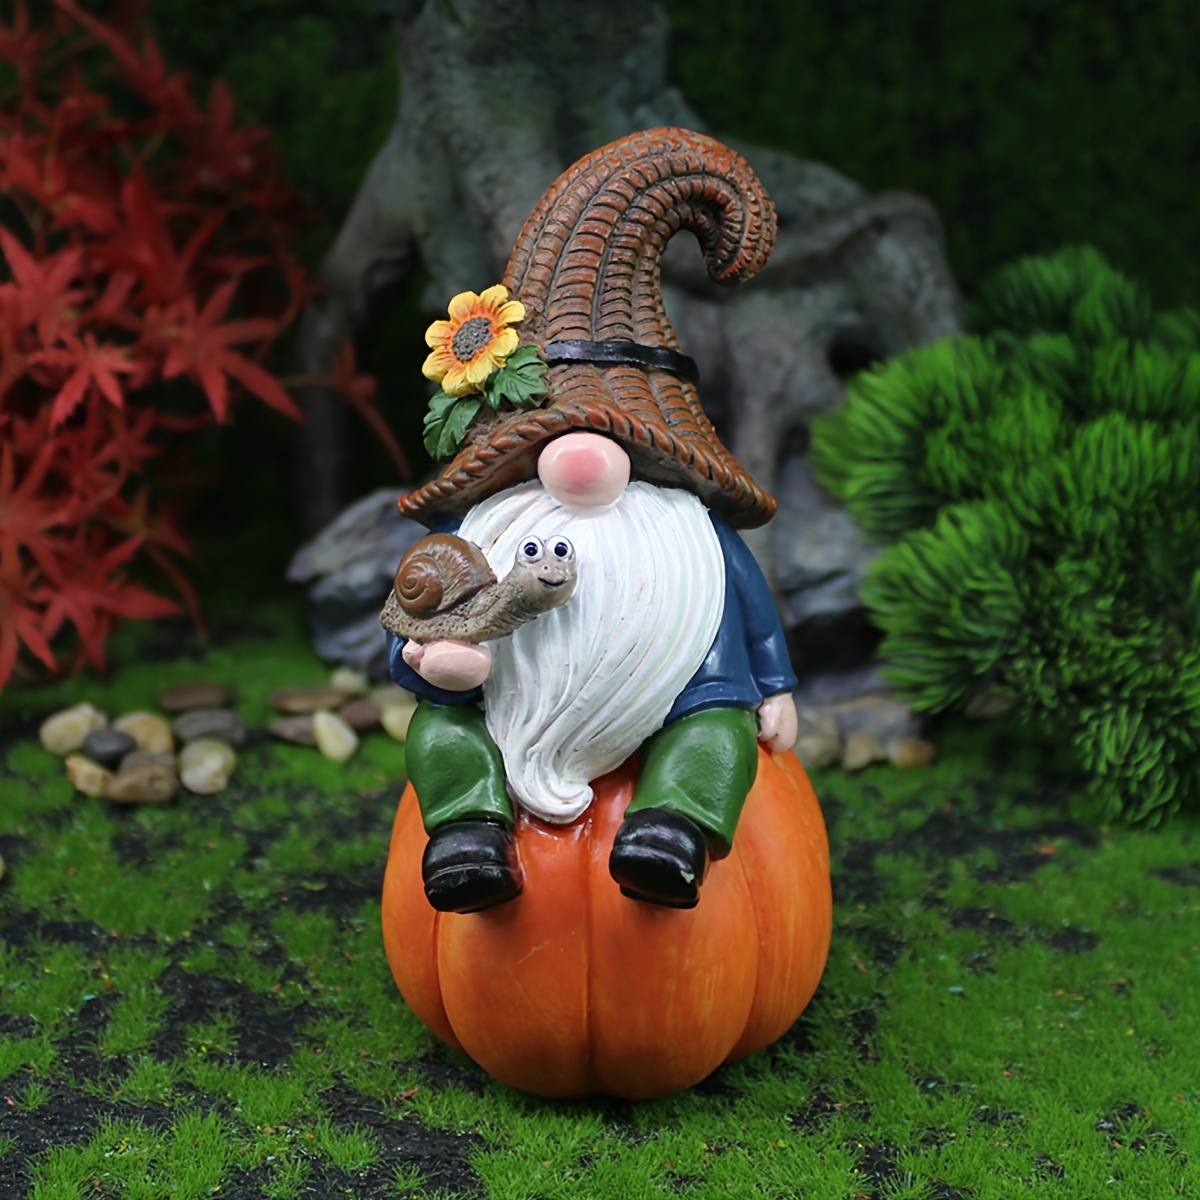 

Charming Resin Gnome & Pumpkin Garden Decor - Versatile Indoor/outdoor Harvest Festival Ornament